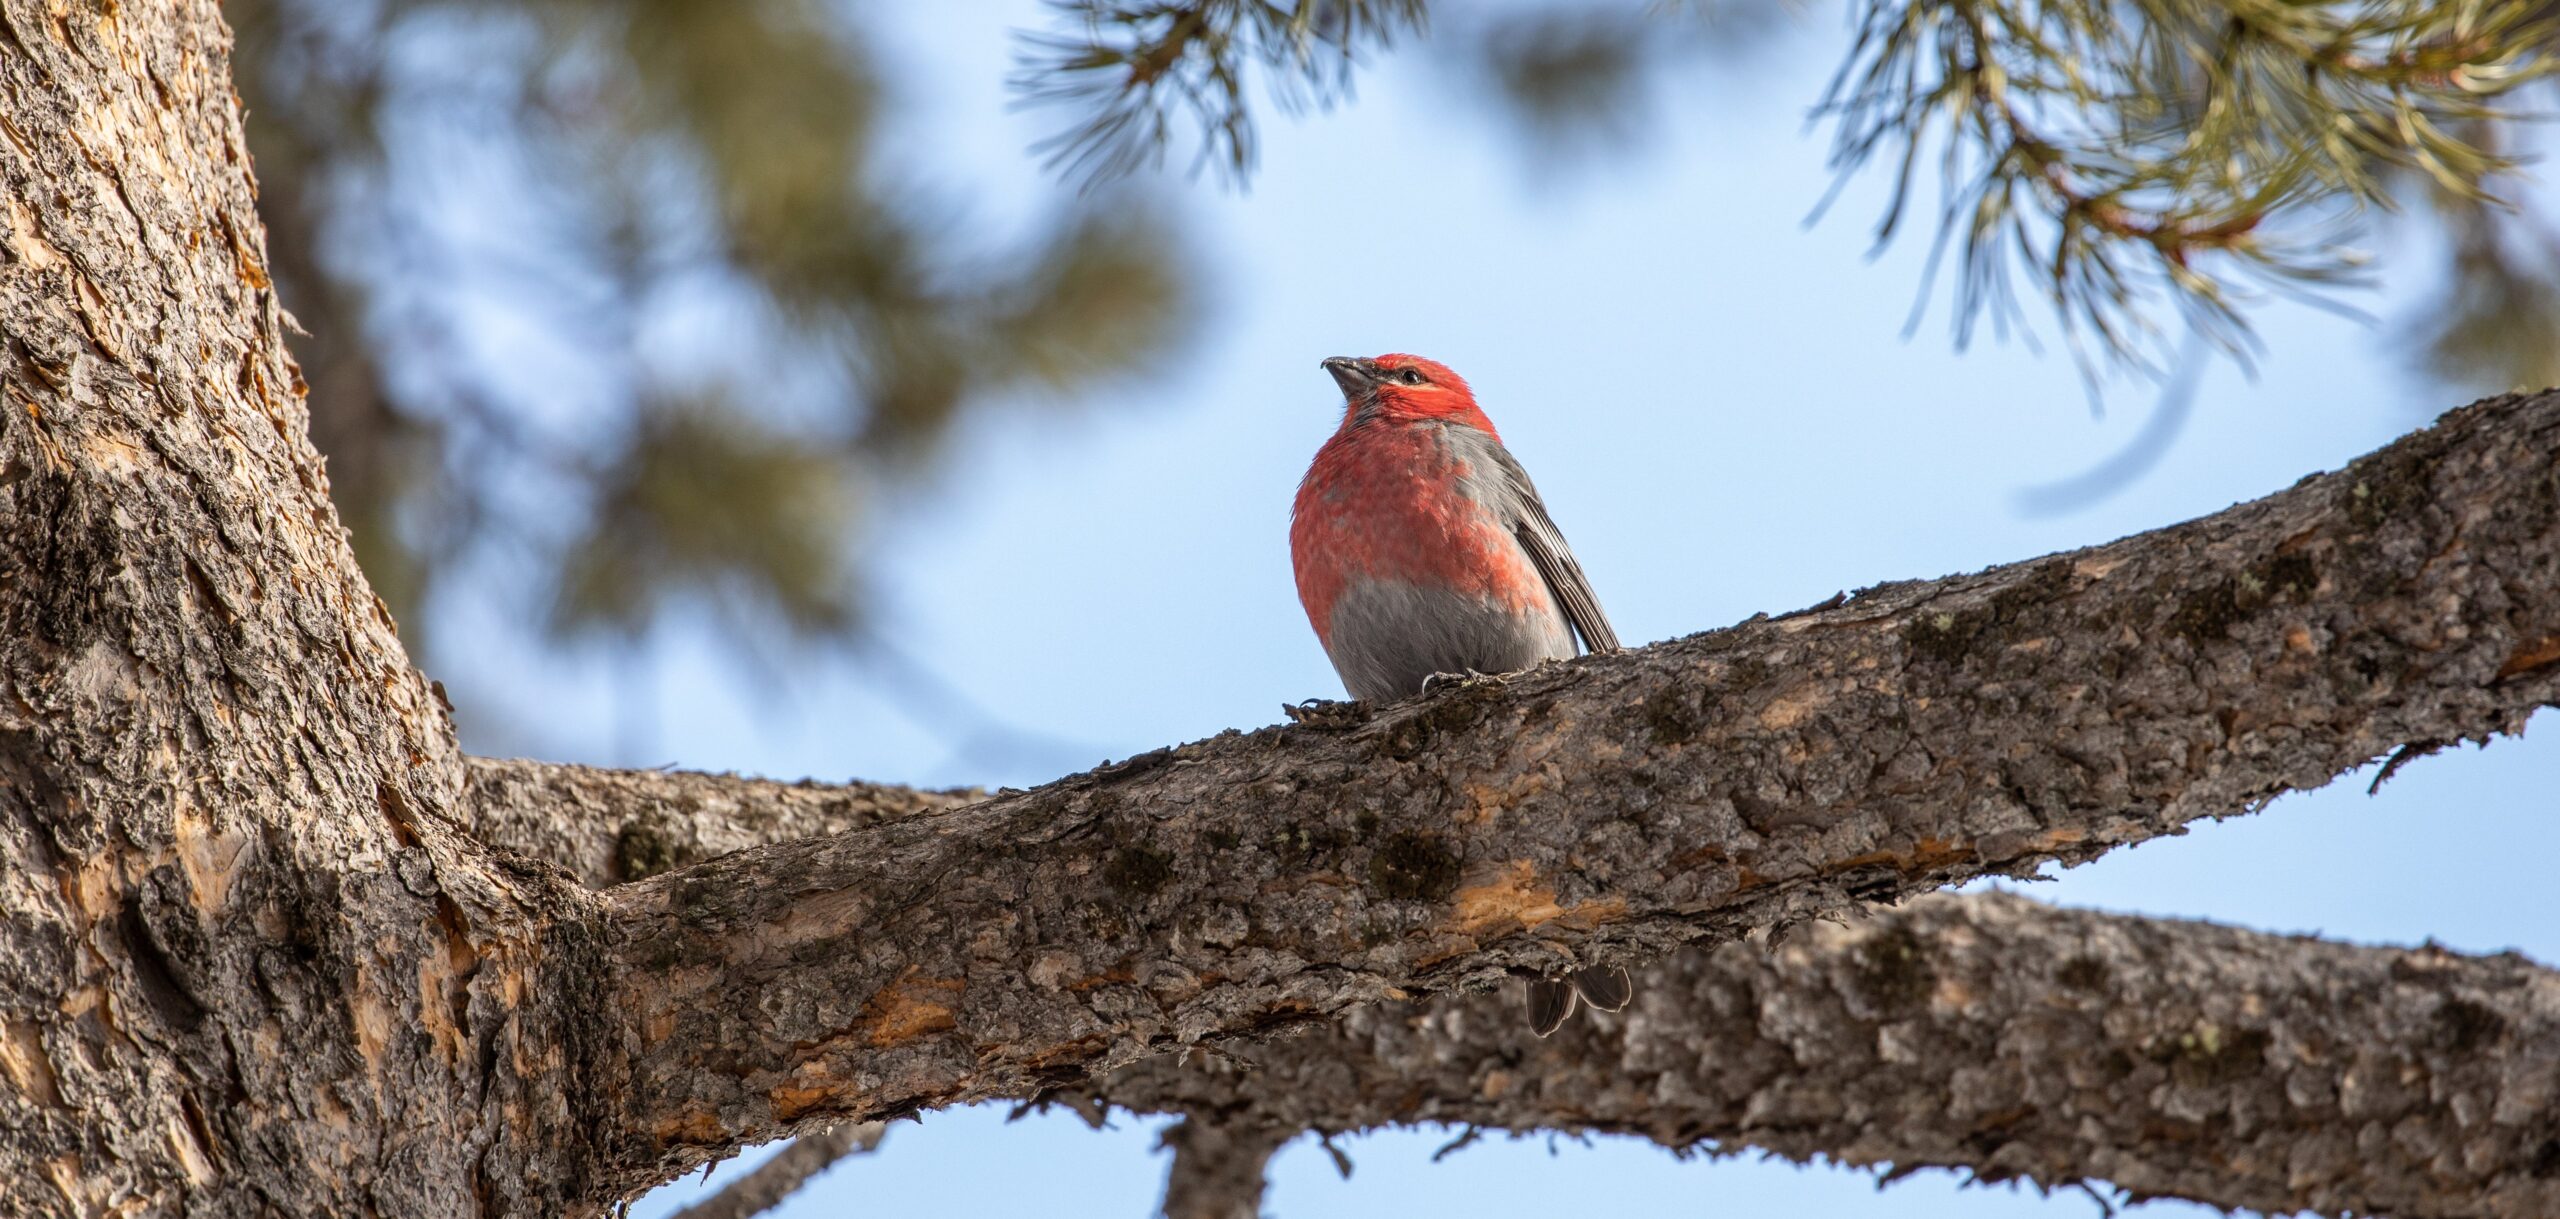 An orange-ish pink bird perches on a tree branch.